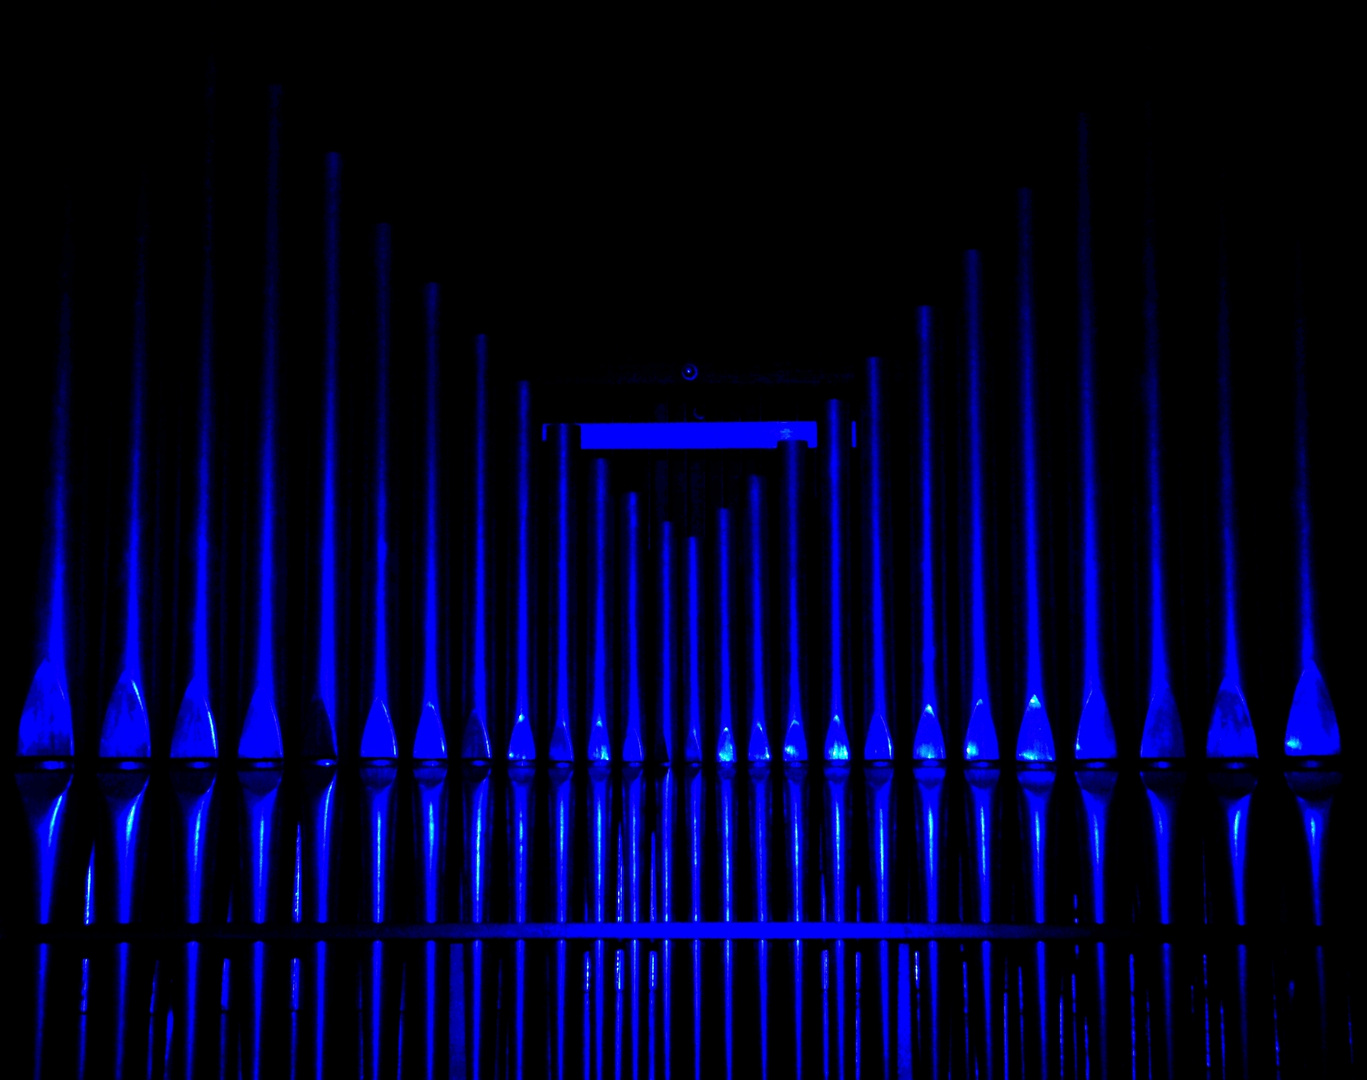 Orgel in blau